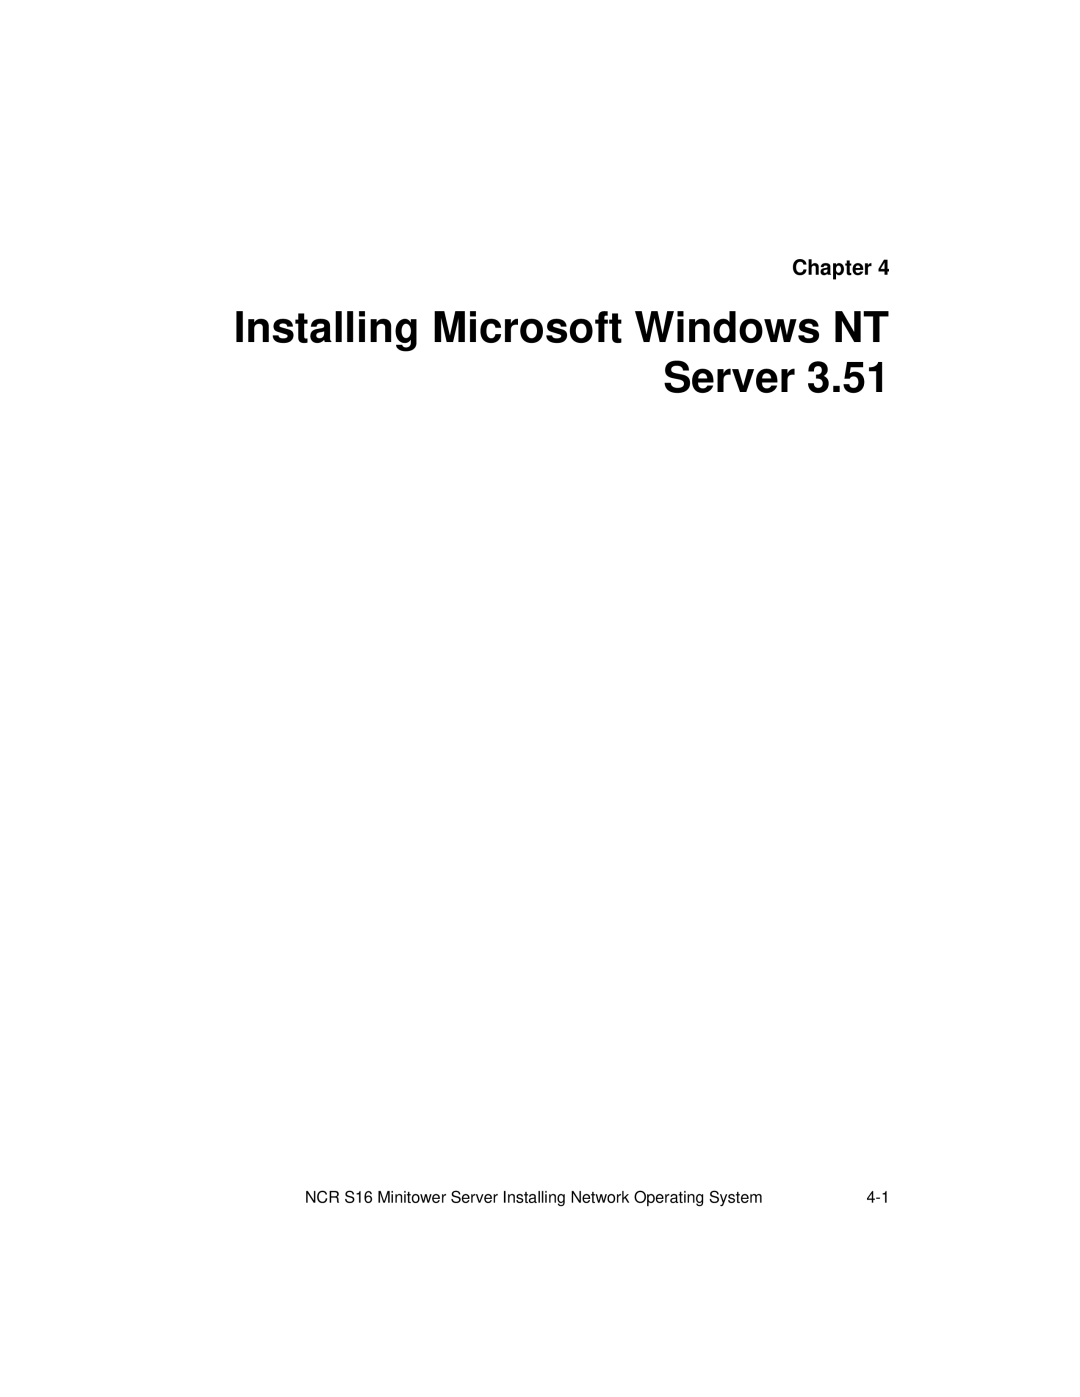 NCR S16 manual Installing Microsoft Windows NT Server 